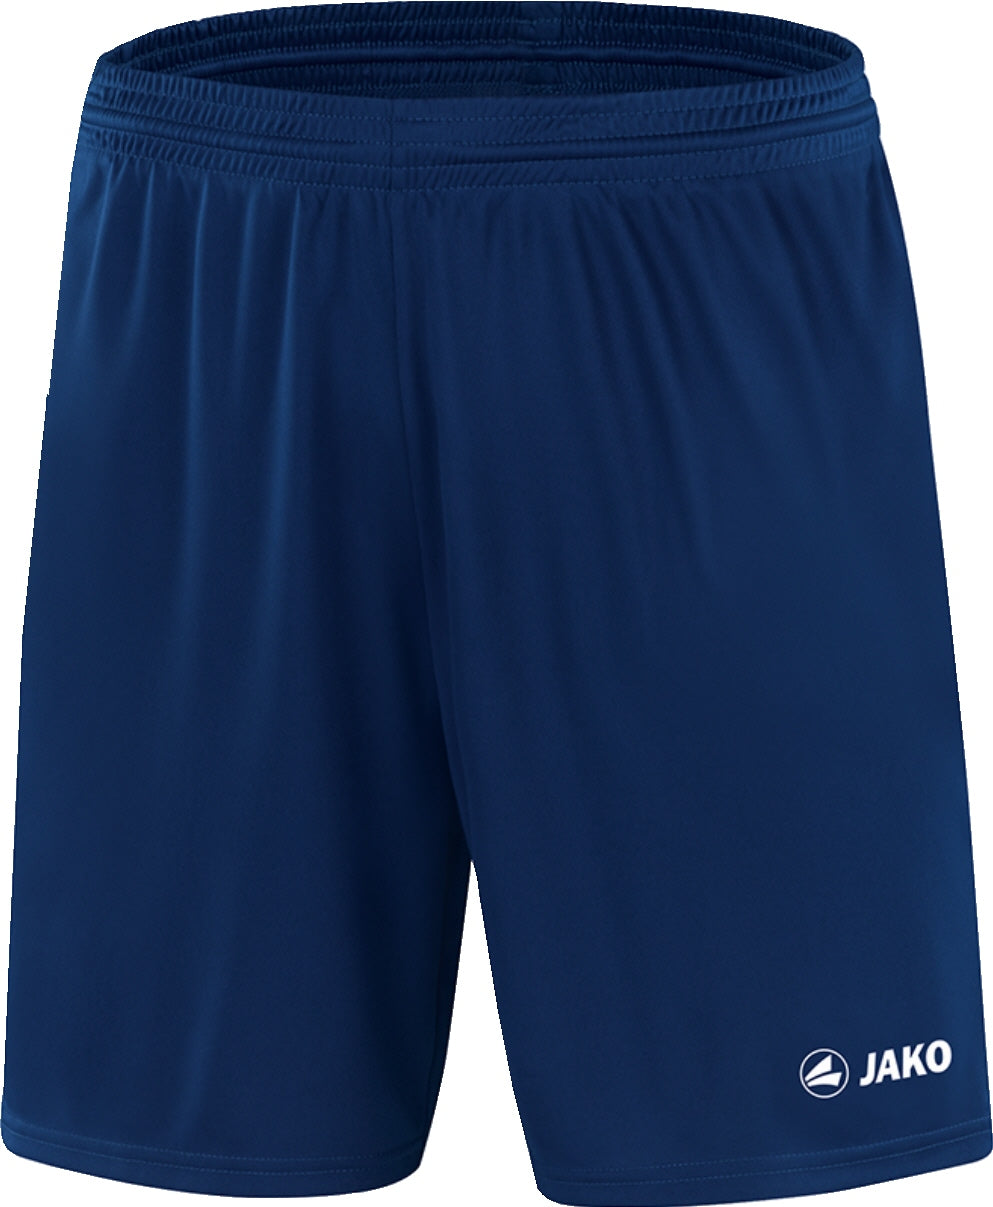 Kids JAKO Moore United Navy Shorts 4400MU/N-K